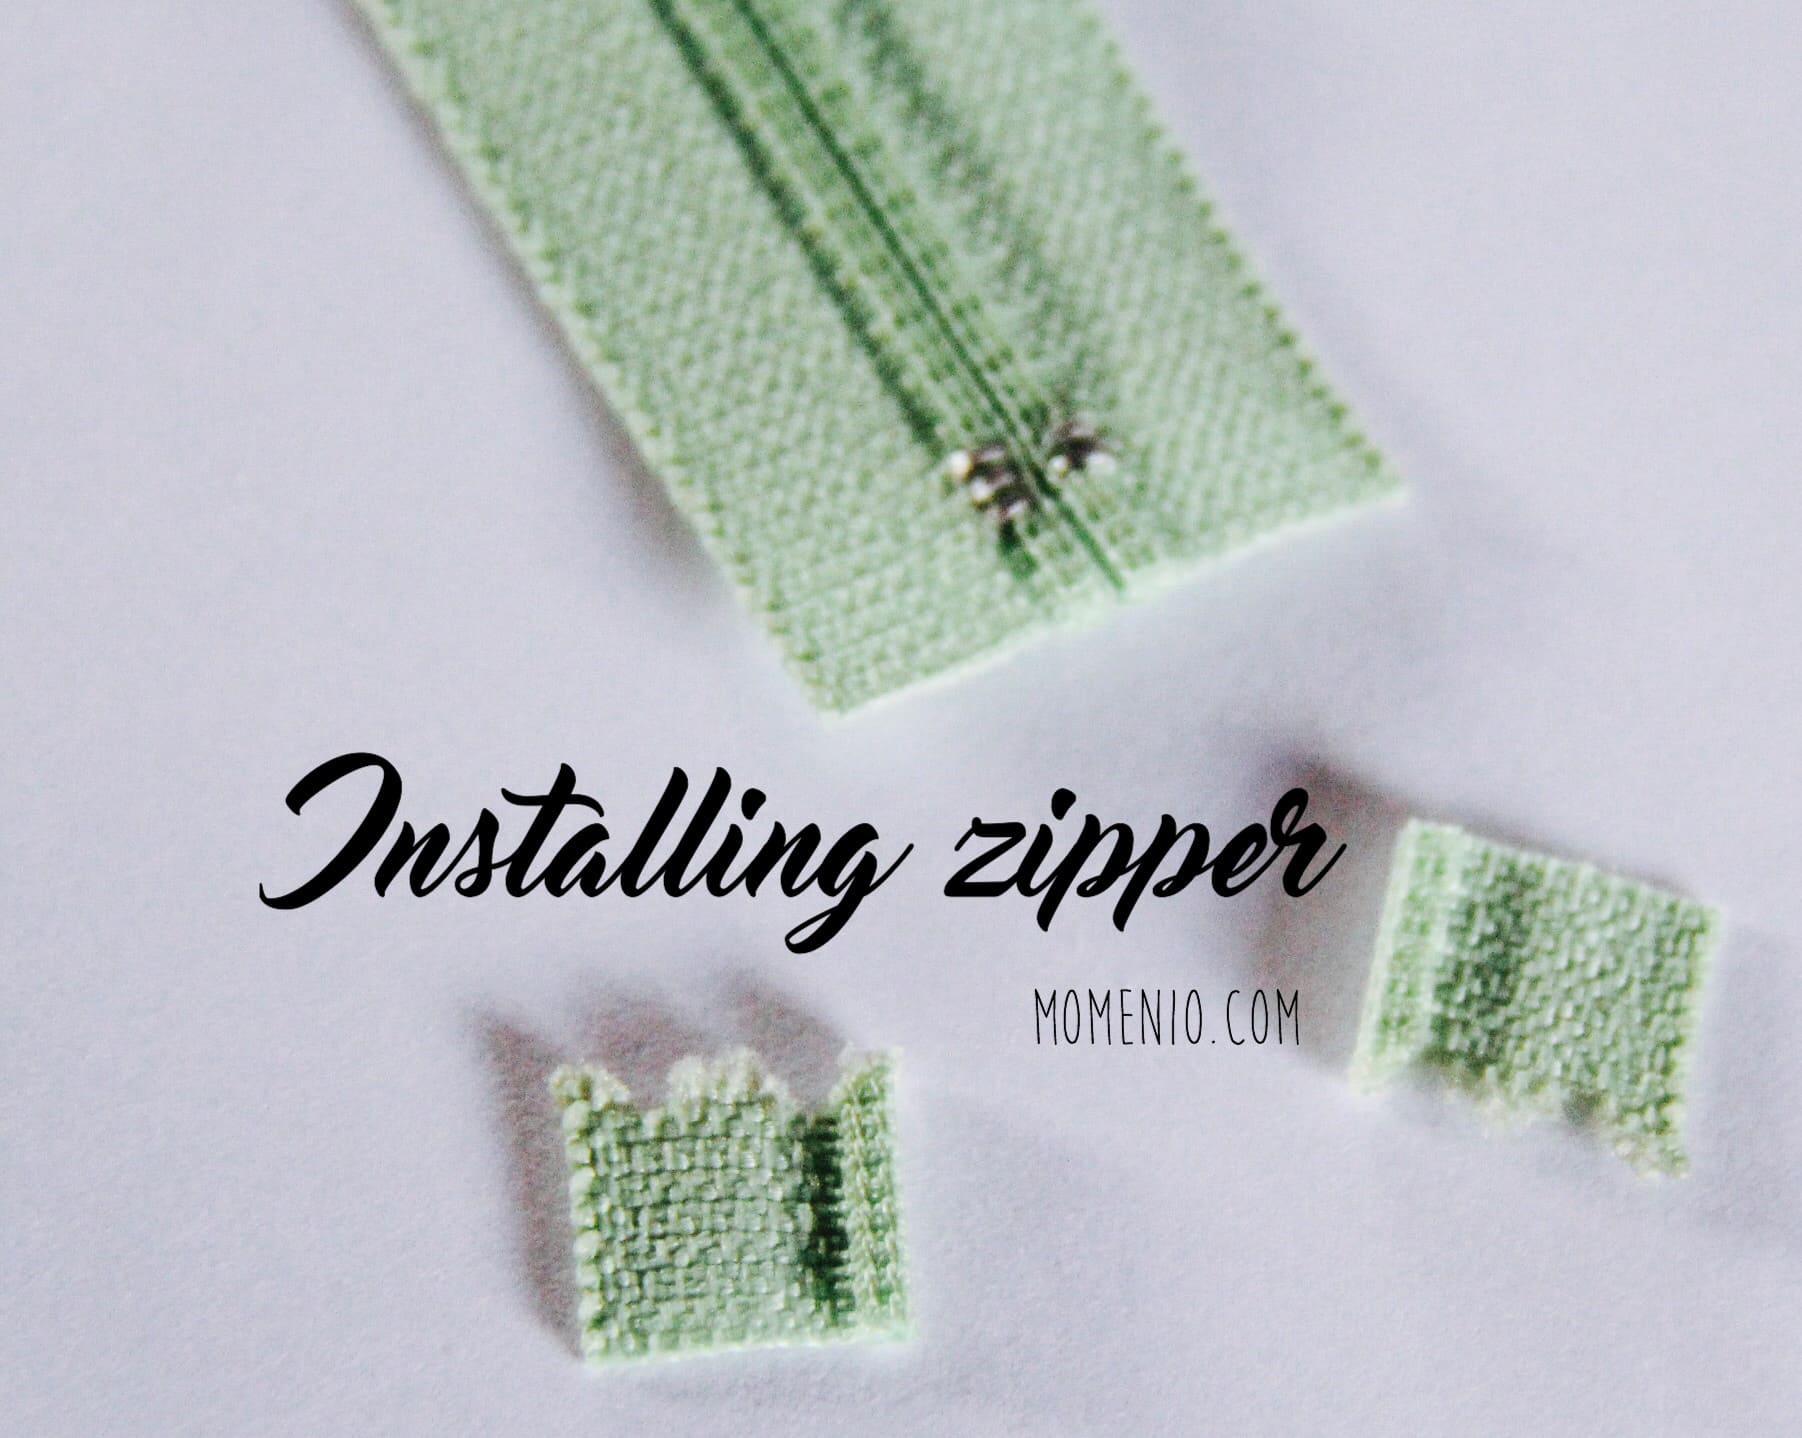 Installing Zipper - Tutorial